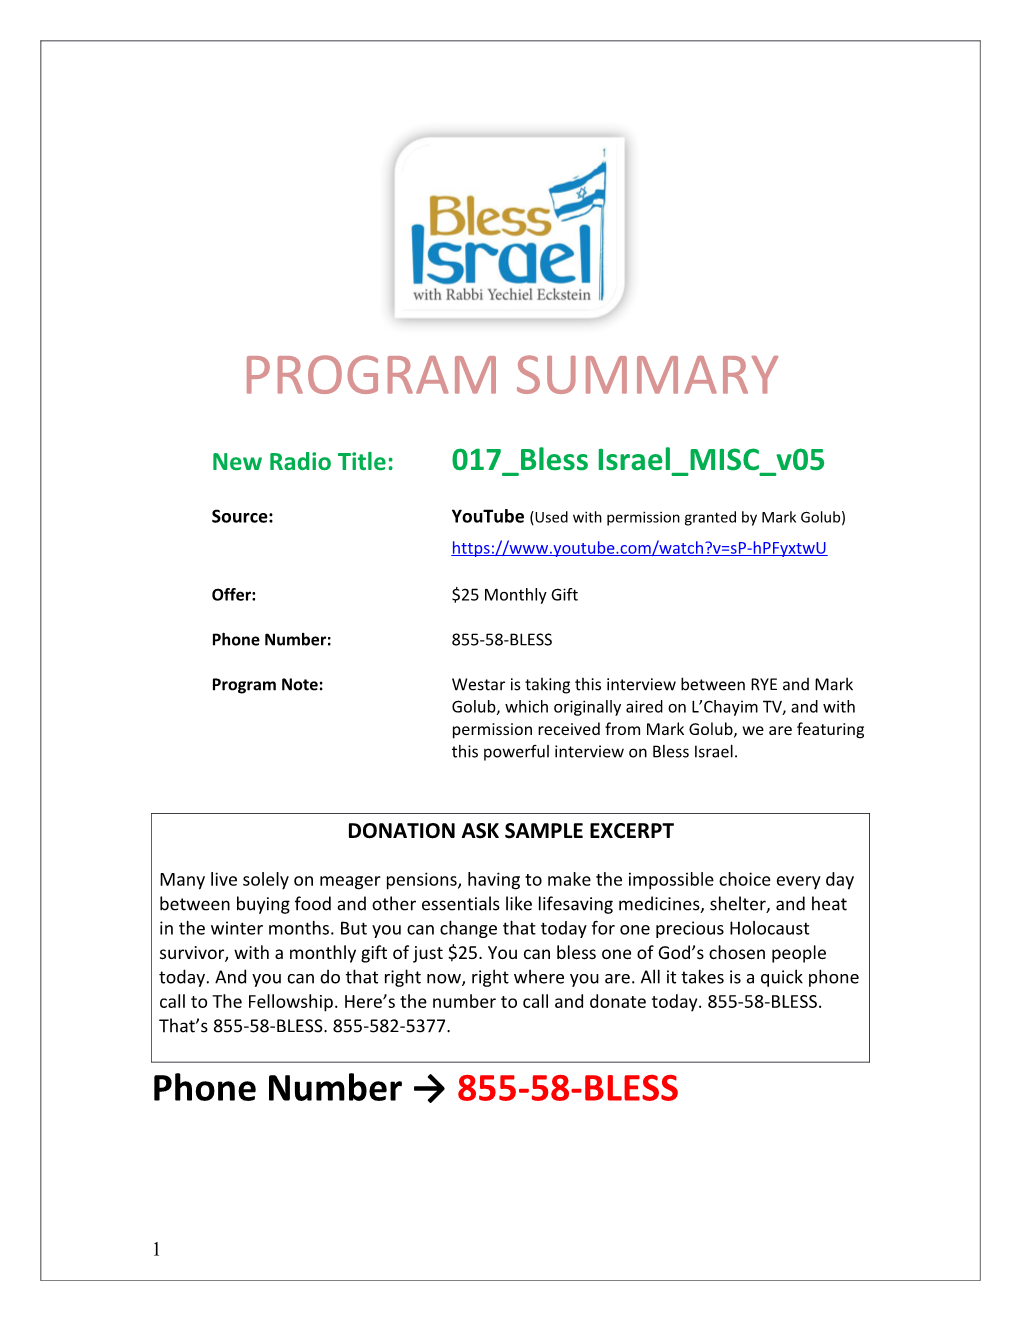 New Radio Title:017 Bless Israel MISC V05